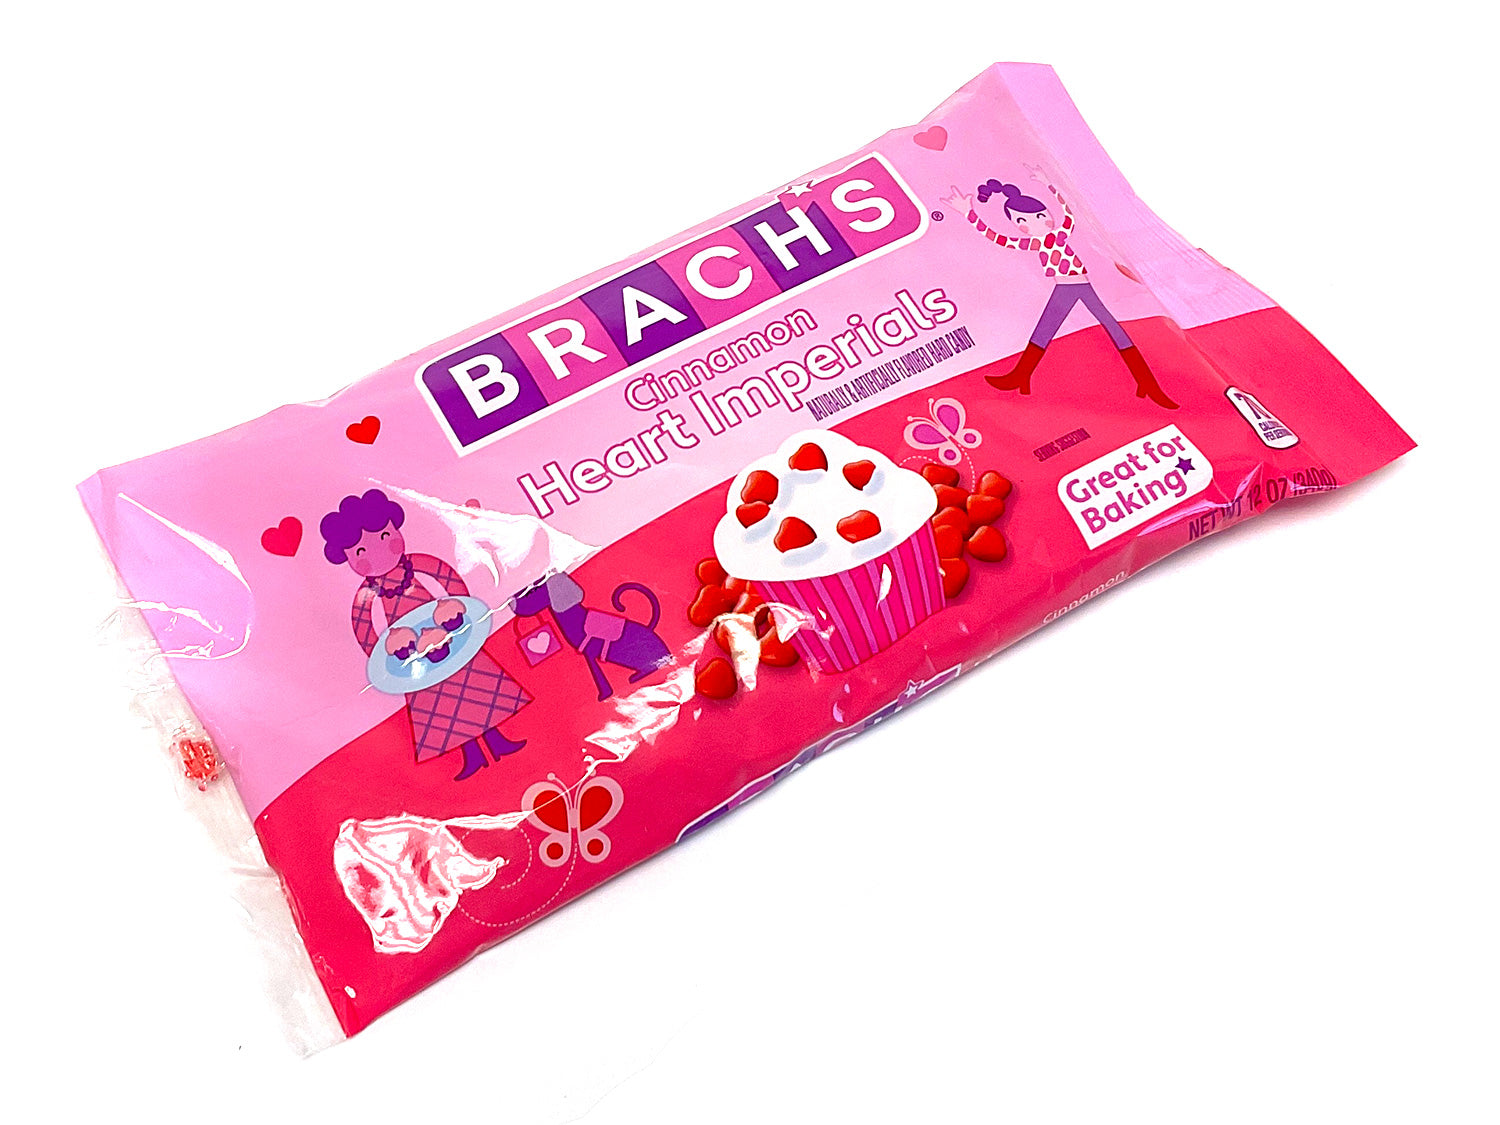  Brach's Cinnamon Jelly Hearts, Valentine's Day Candy